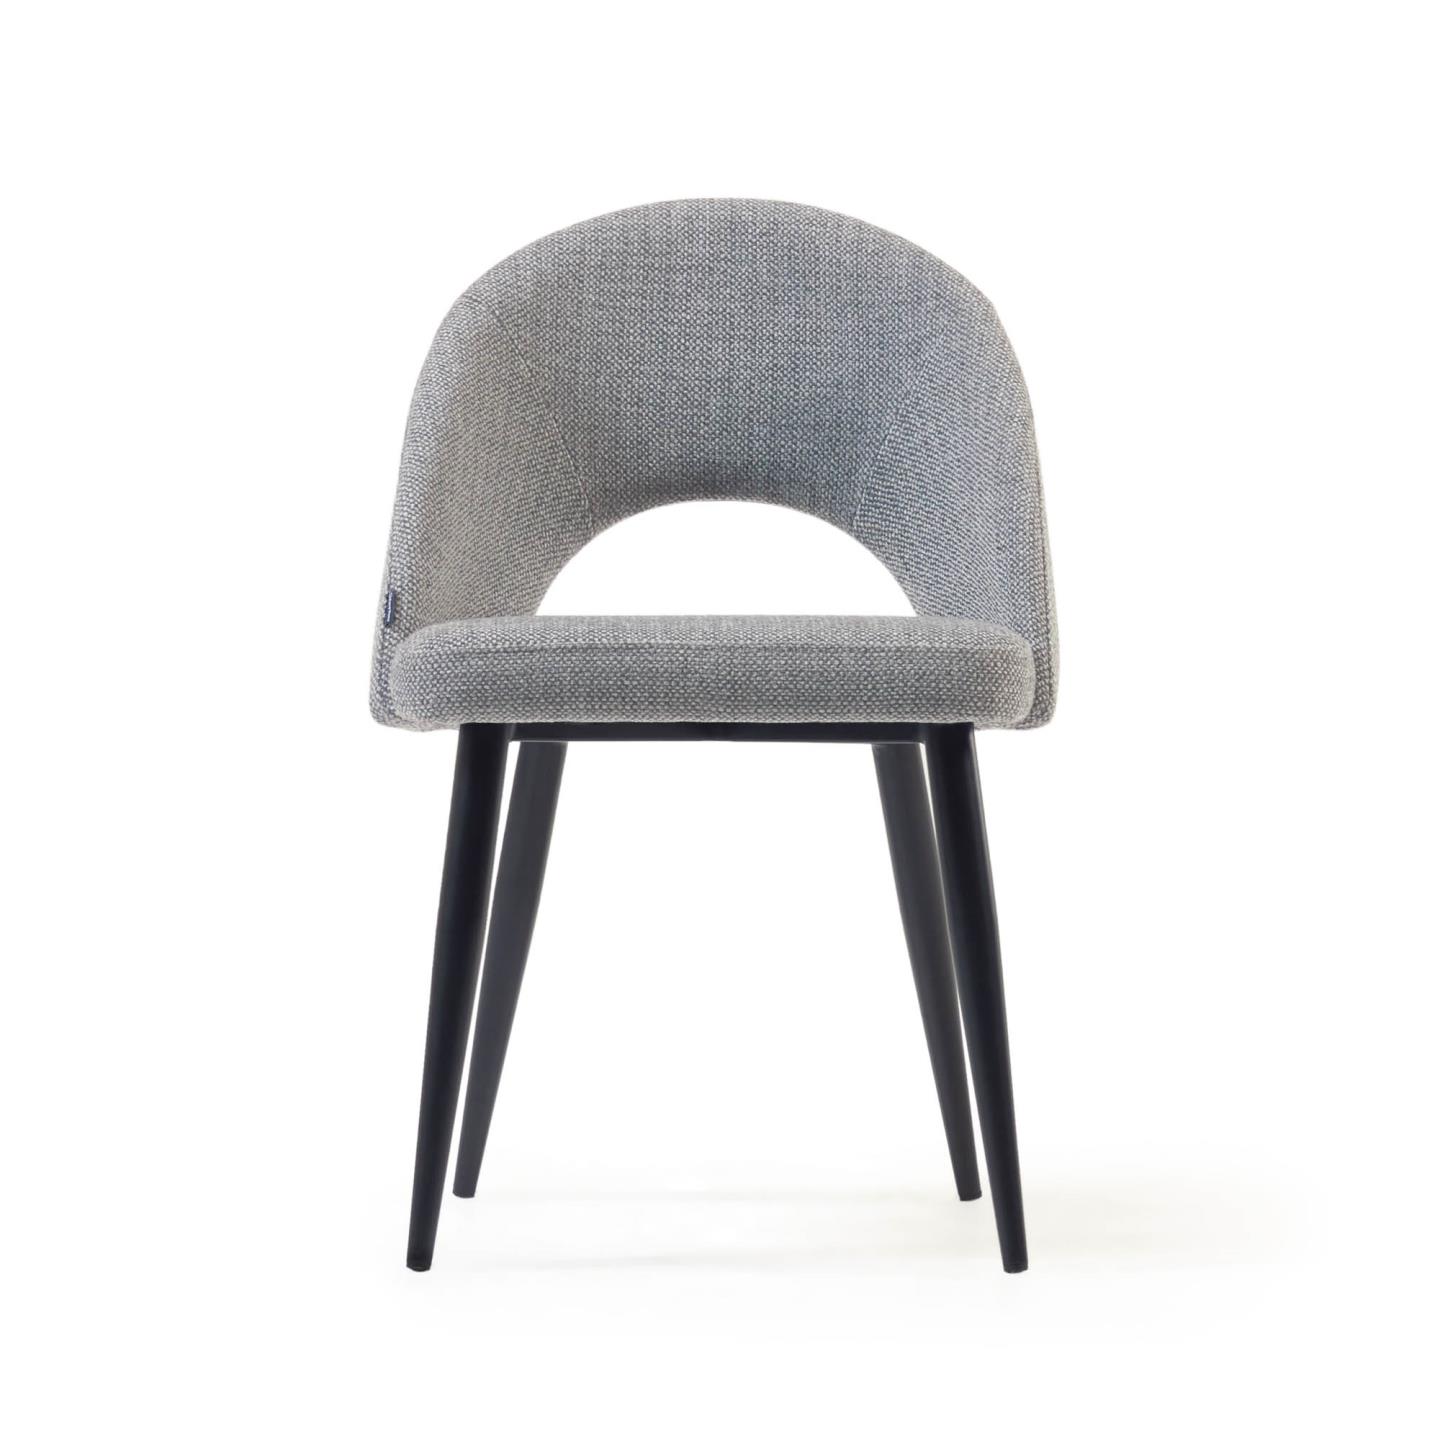 LAFORMA Mael spisebordsstol - grå stof og sort stål